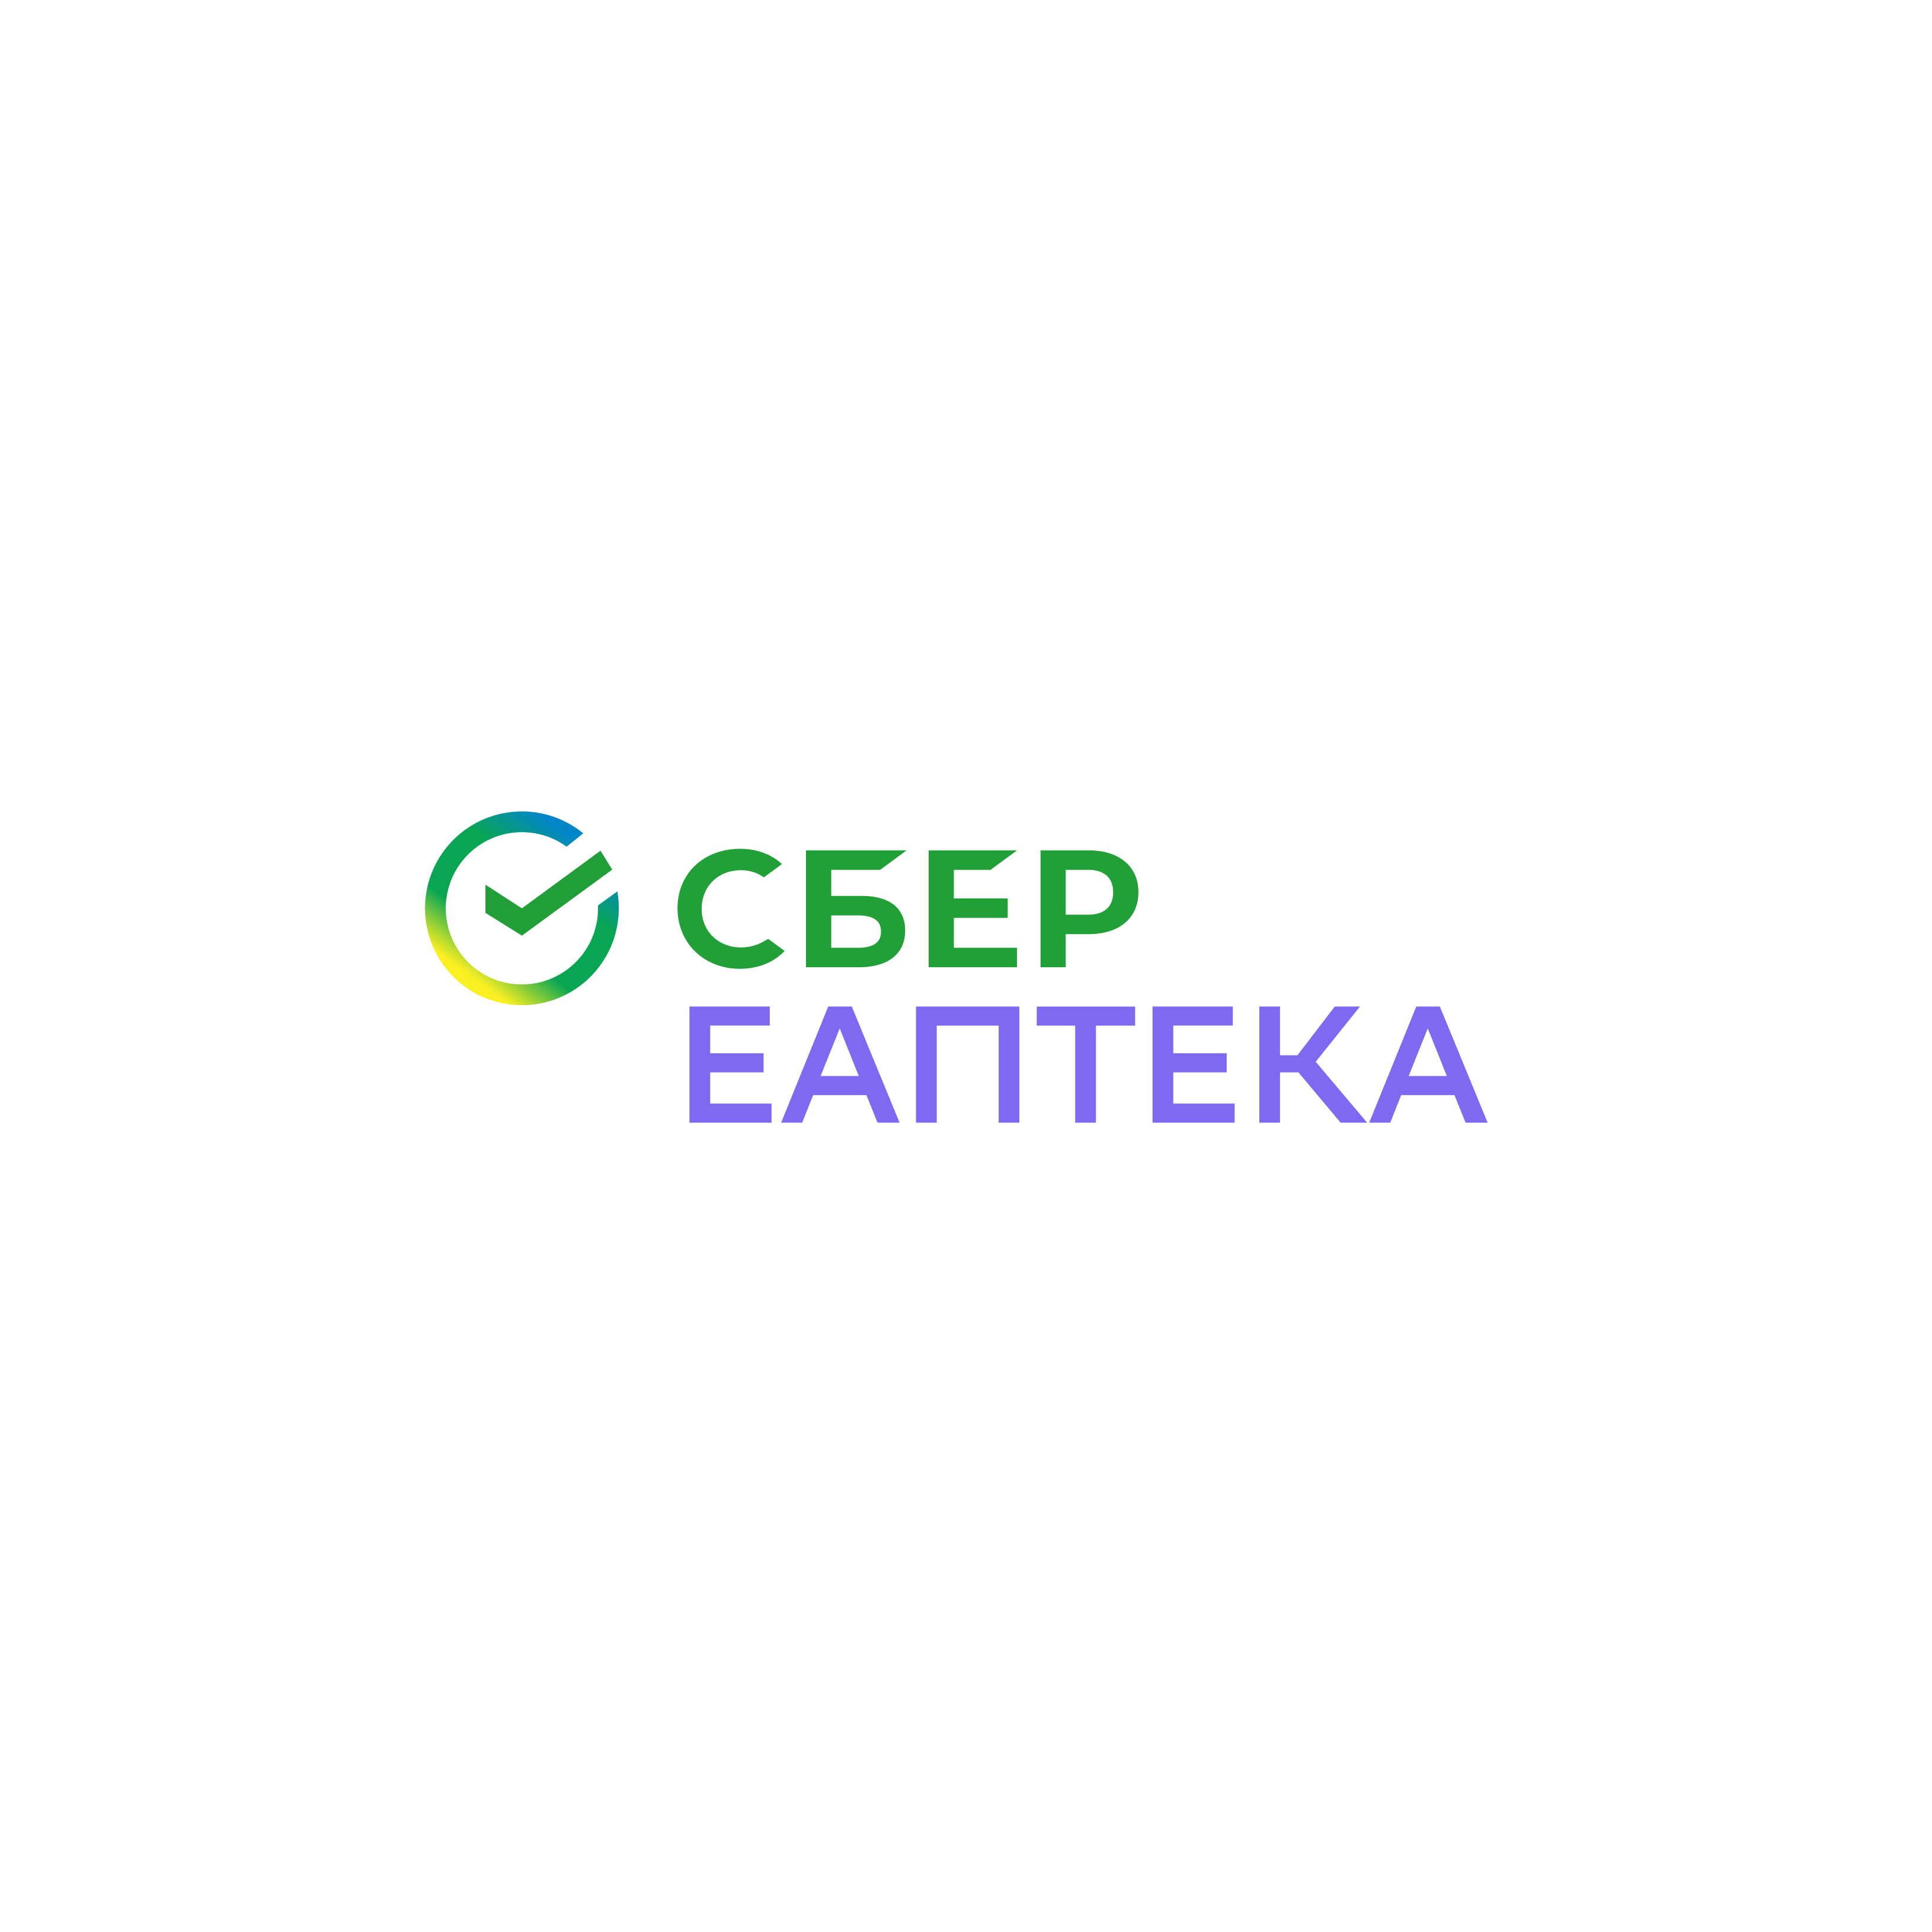 Сбер спасибо в еаптека. ЕАПТЕКА лого. EAPTEKA логотип. Сбер ЕАПТЕКА. Сбер-аптека интернет.